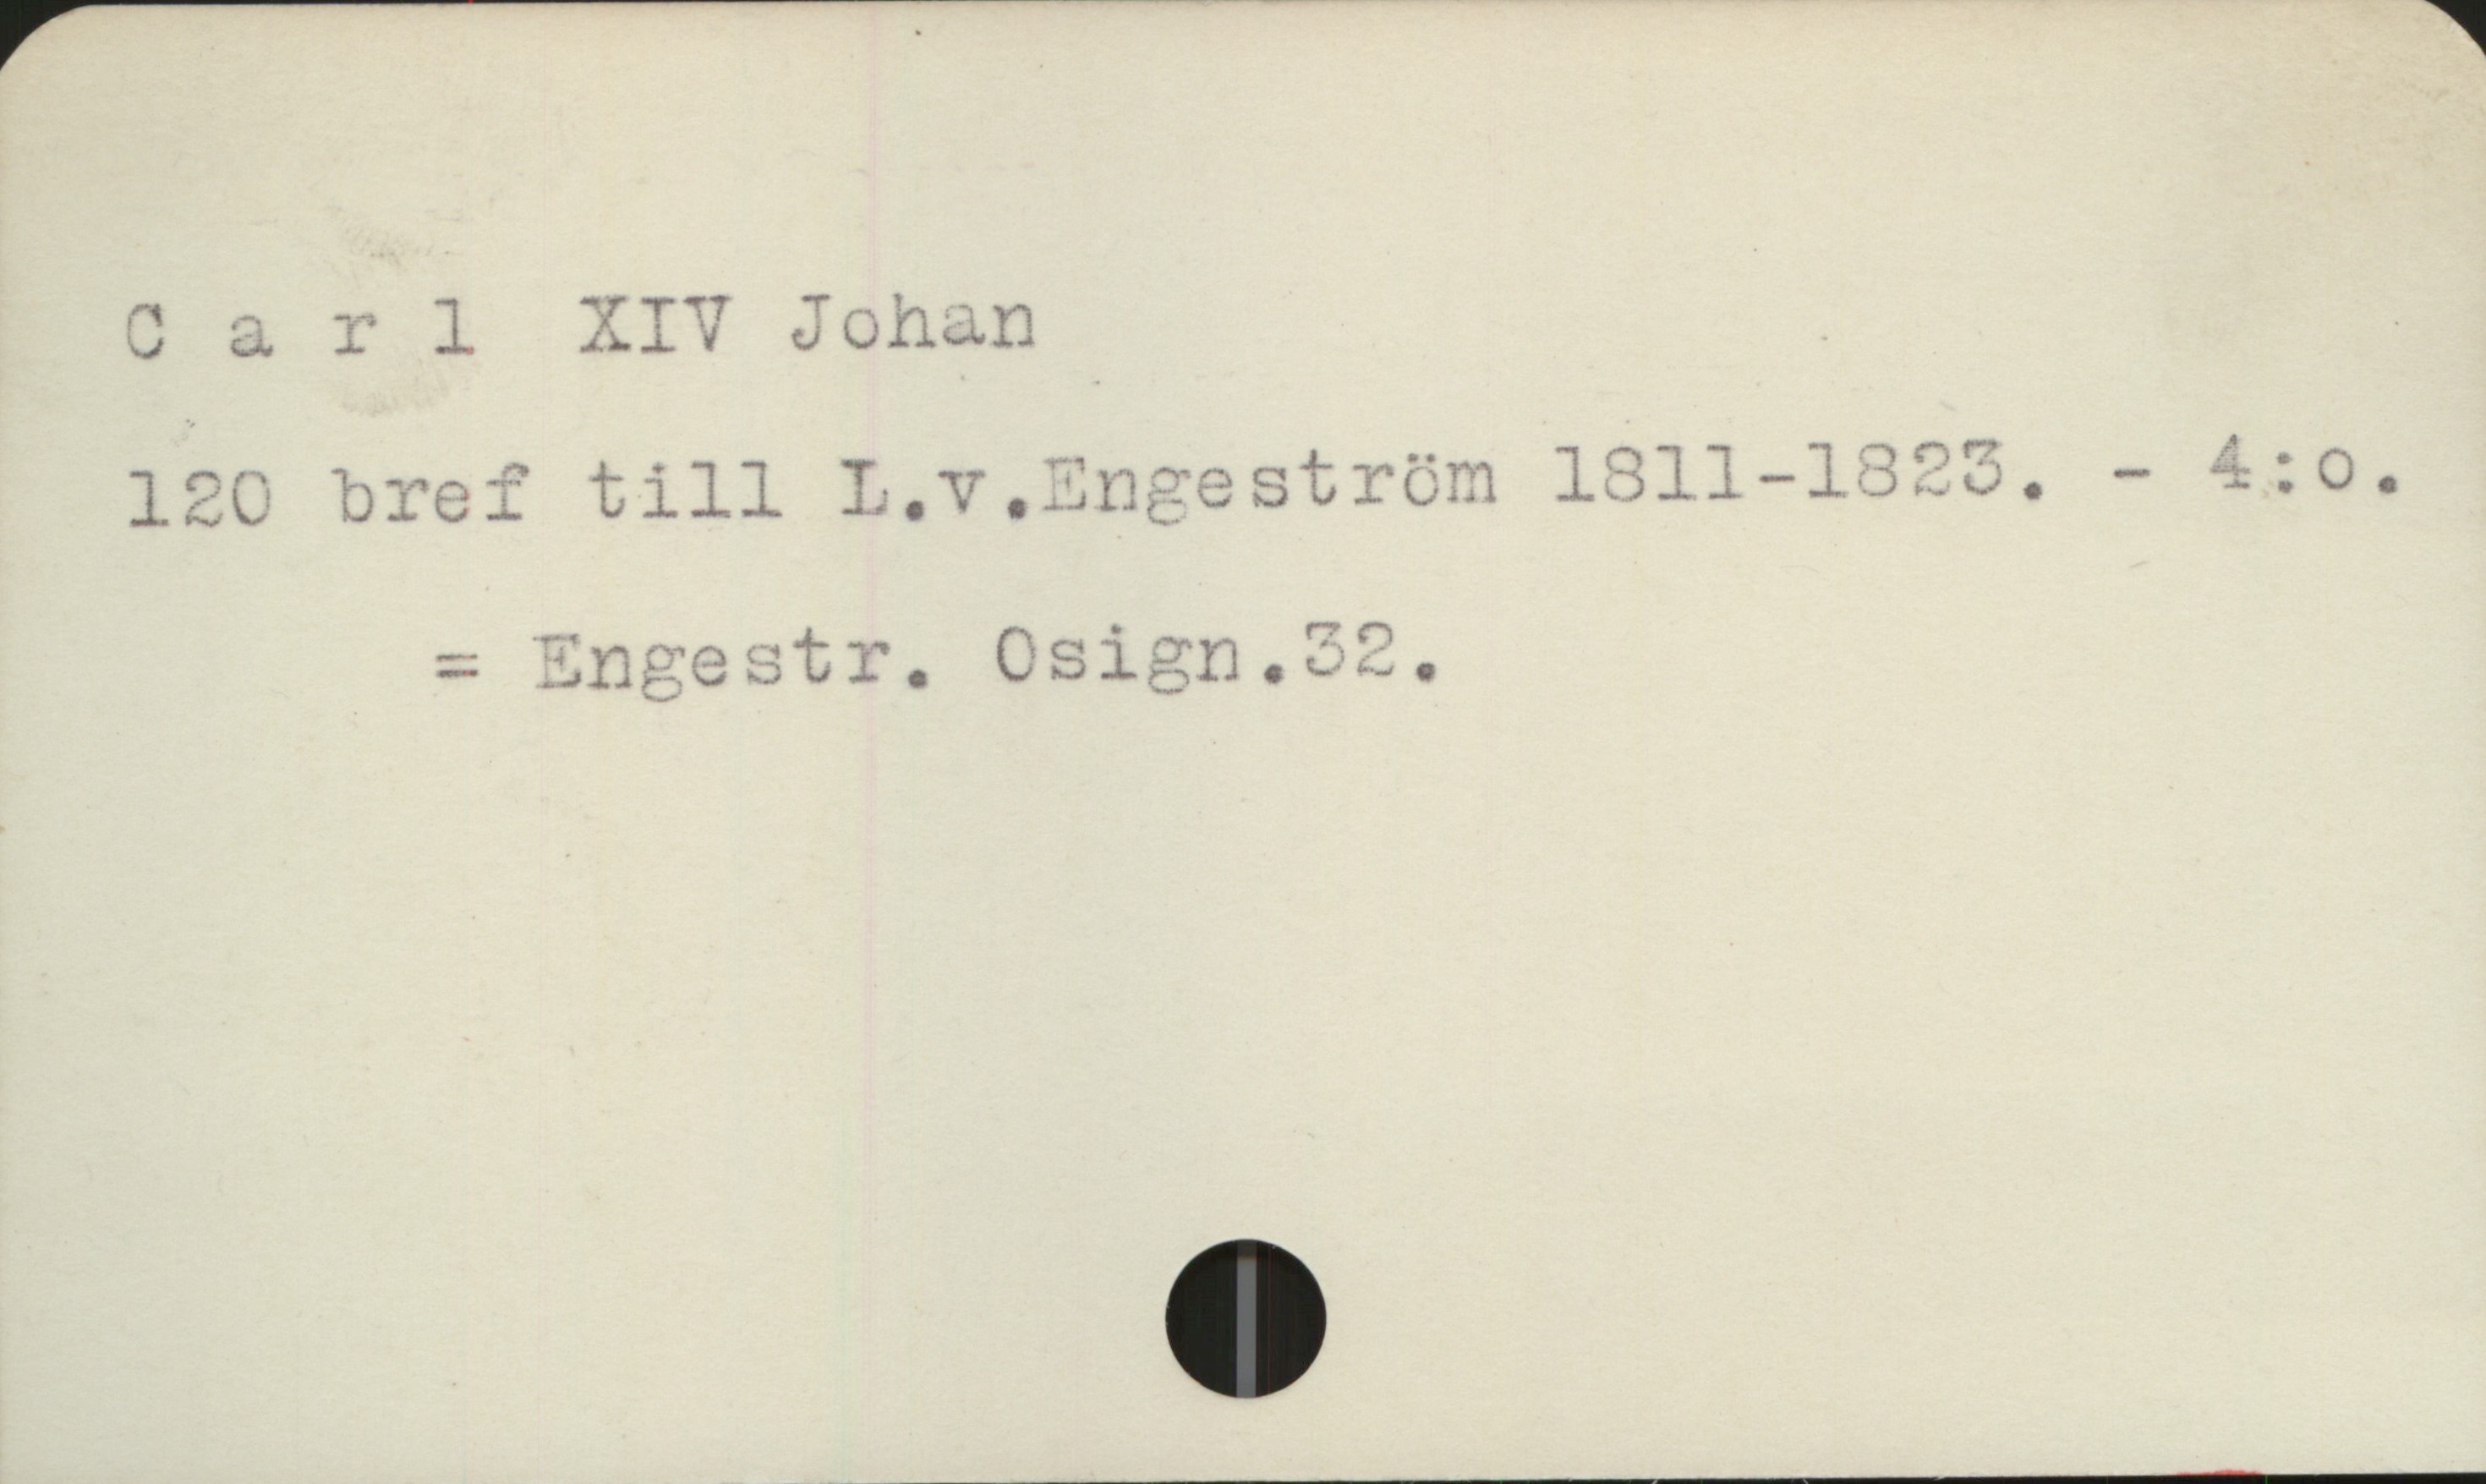  C a 7 1 XIV Johan , .
120 bref till L.v.Znzeström 1811-1398. - 4:0.
= Engestr.

